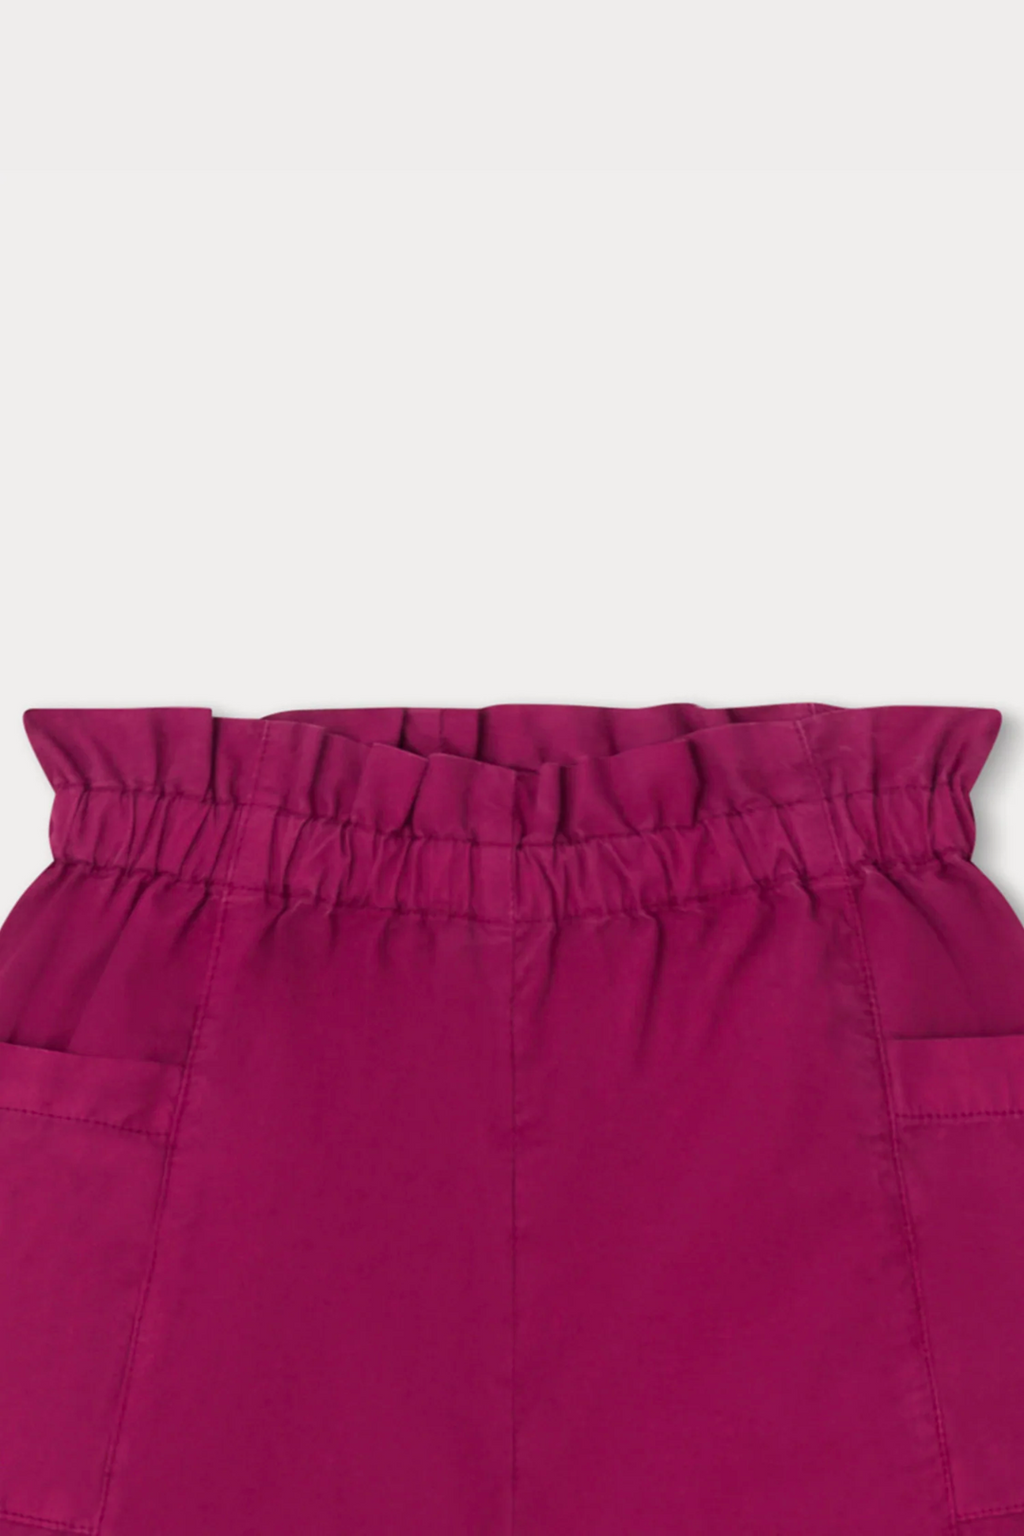 Baby Purple Nougat Shorts